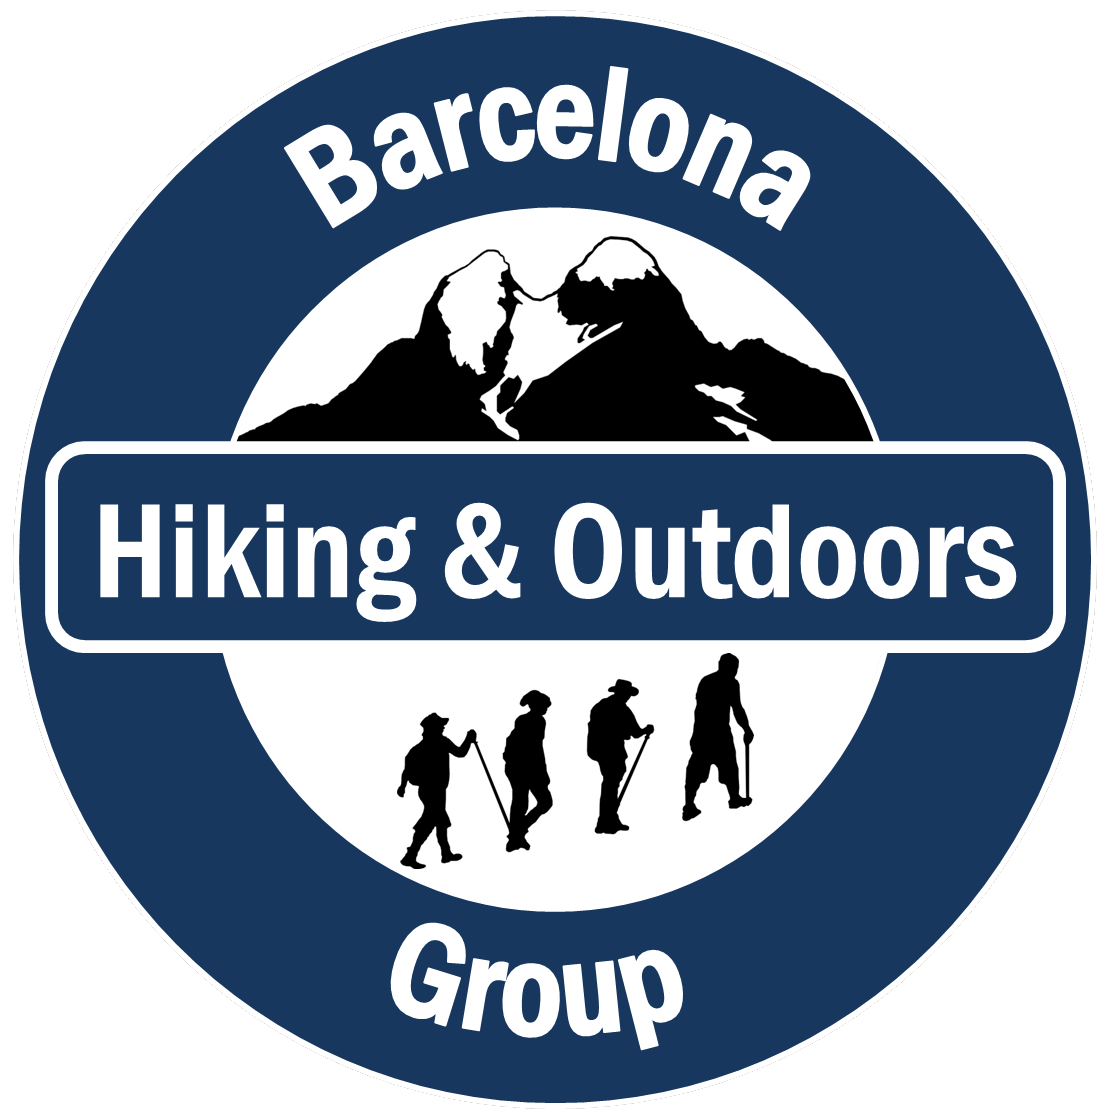 Barcelona Hiking & Outdoors Group